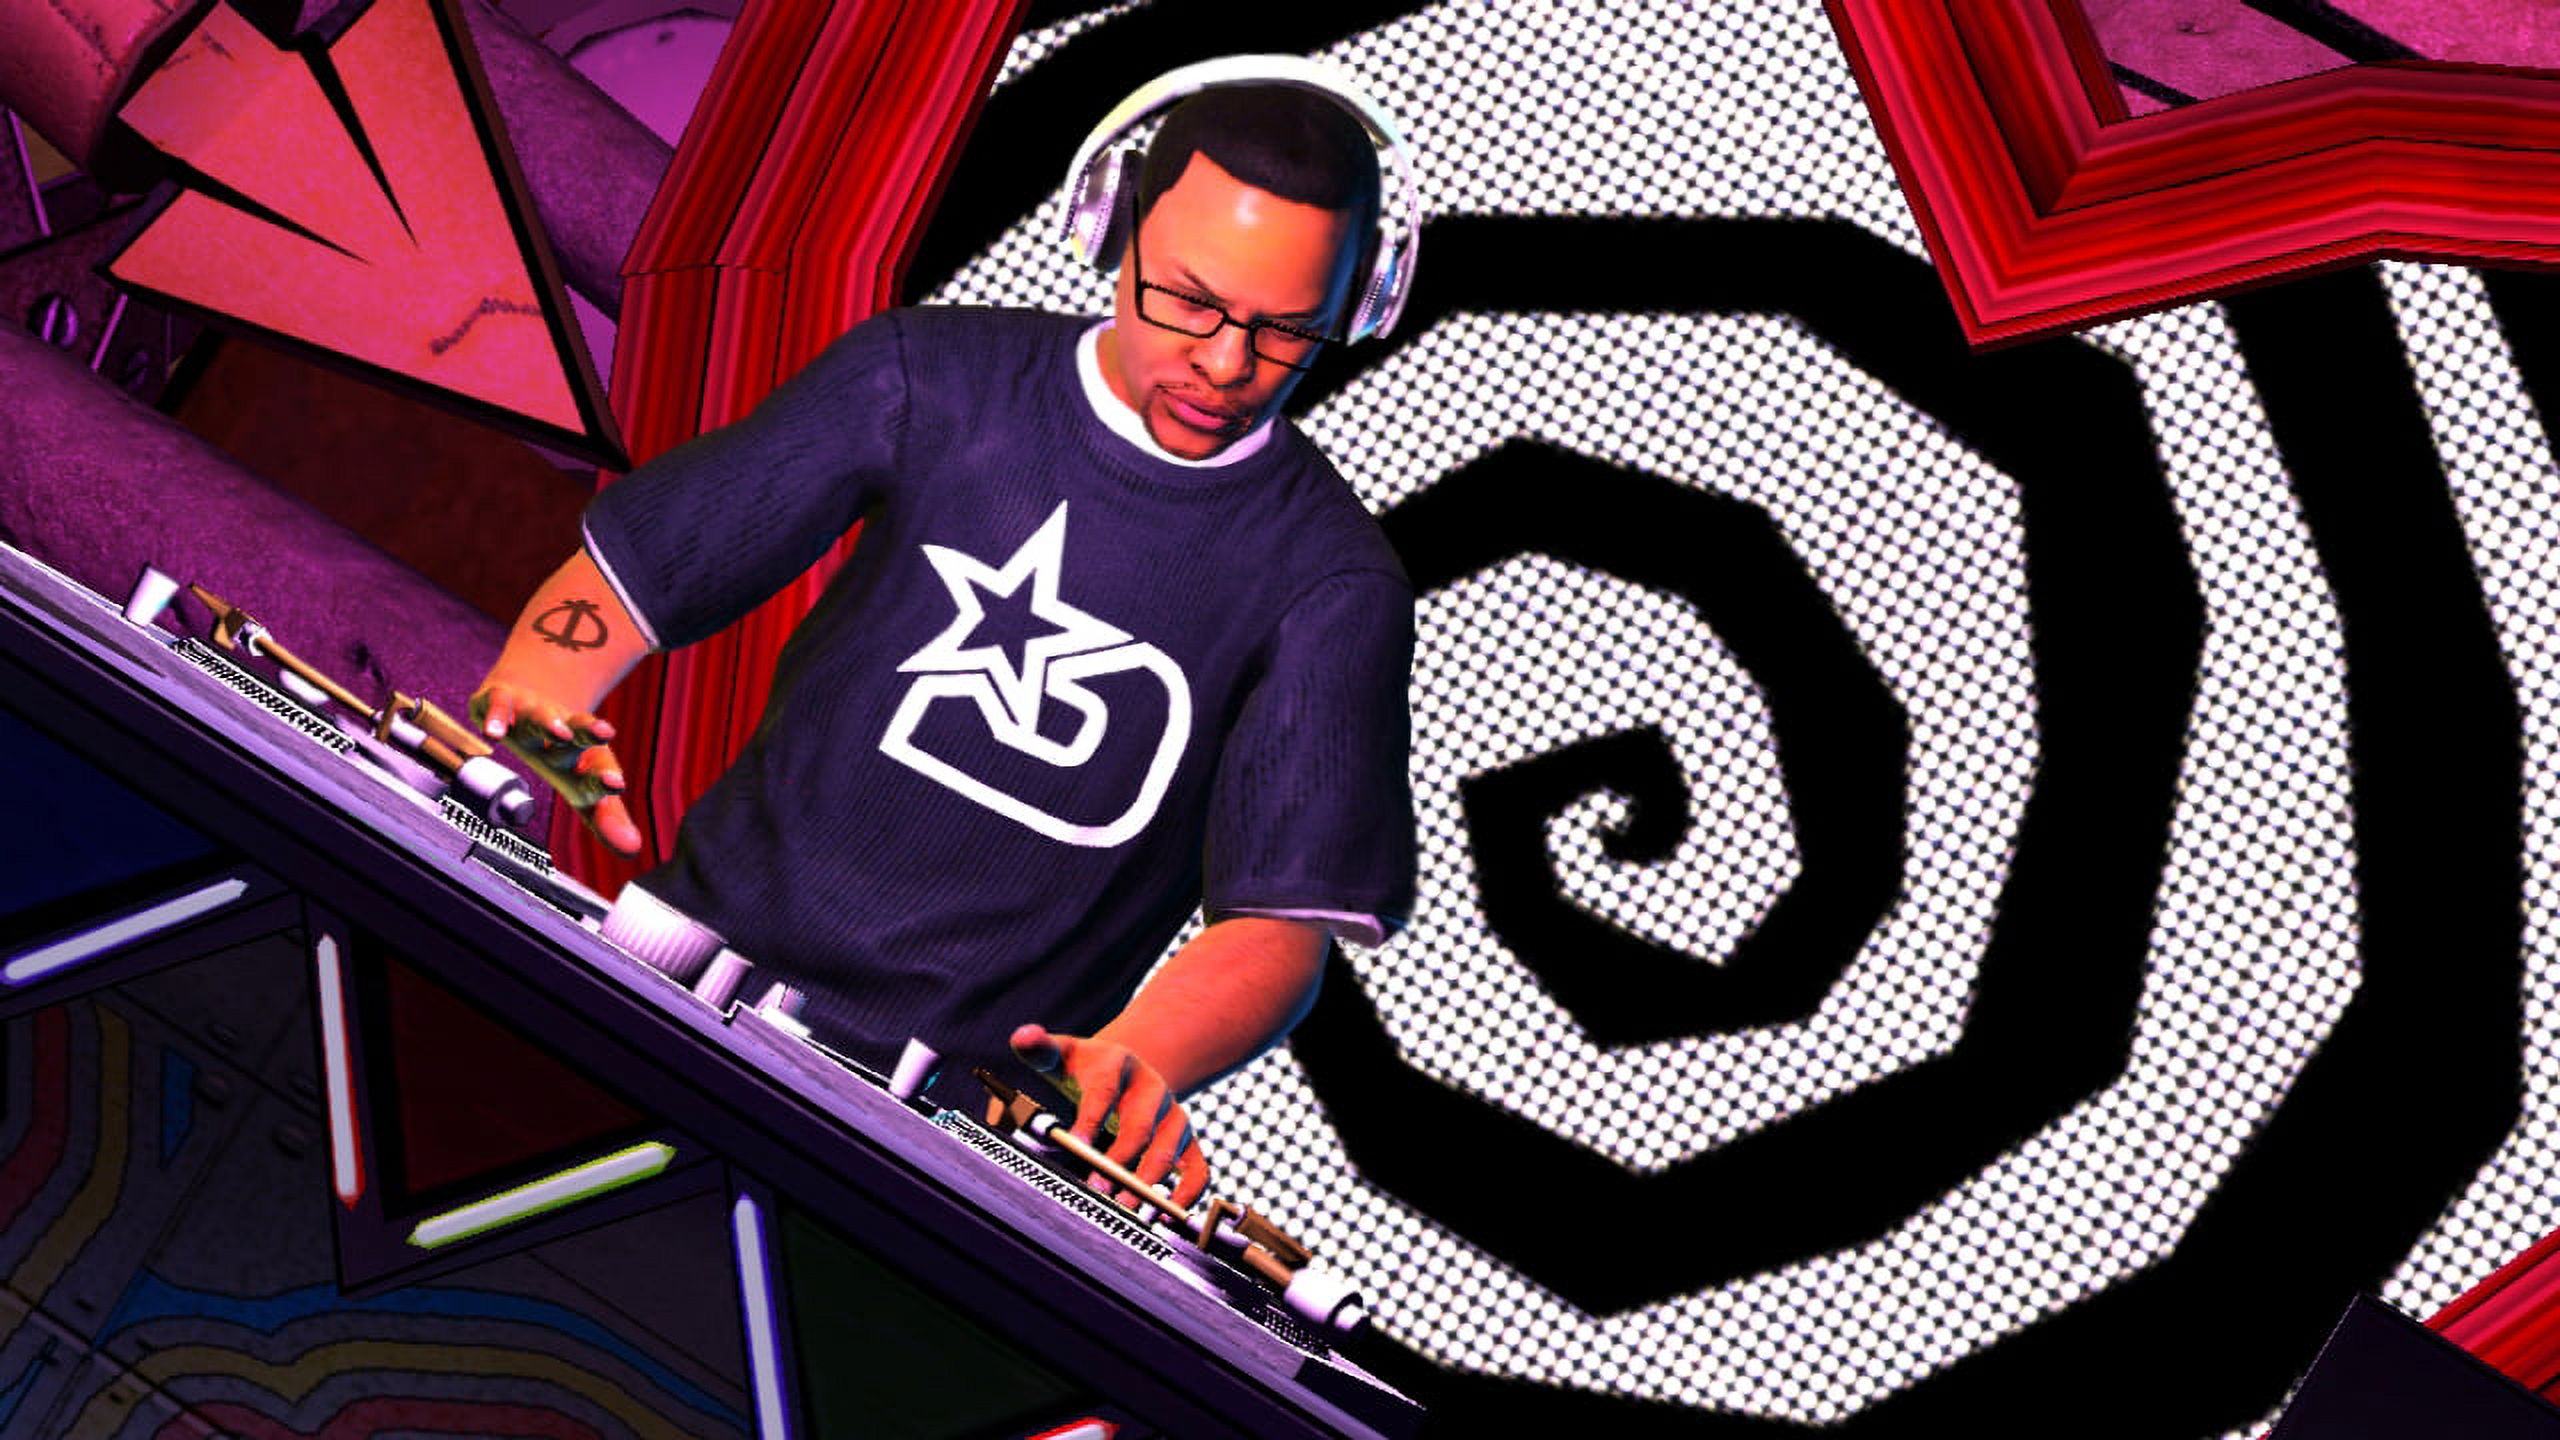 DJ Hero (sw), Activision Blizzard, PlayStation 3, 047875961920 - image 4 of 11